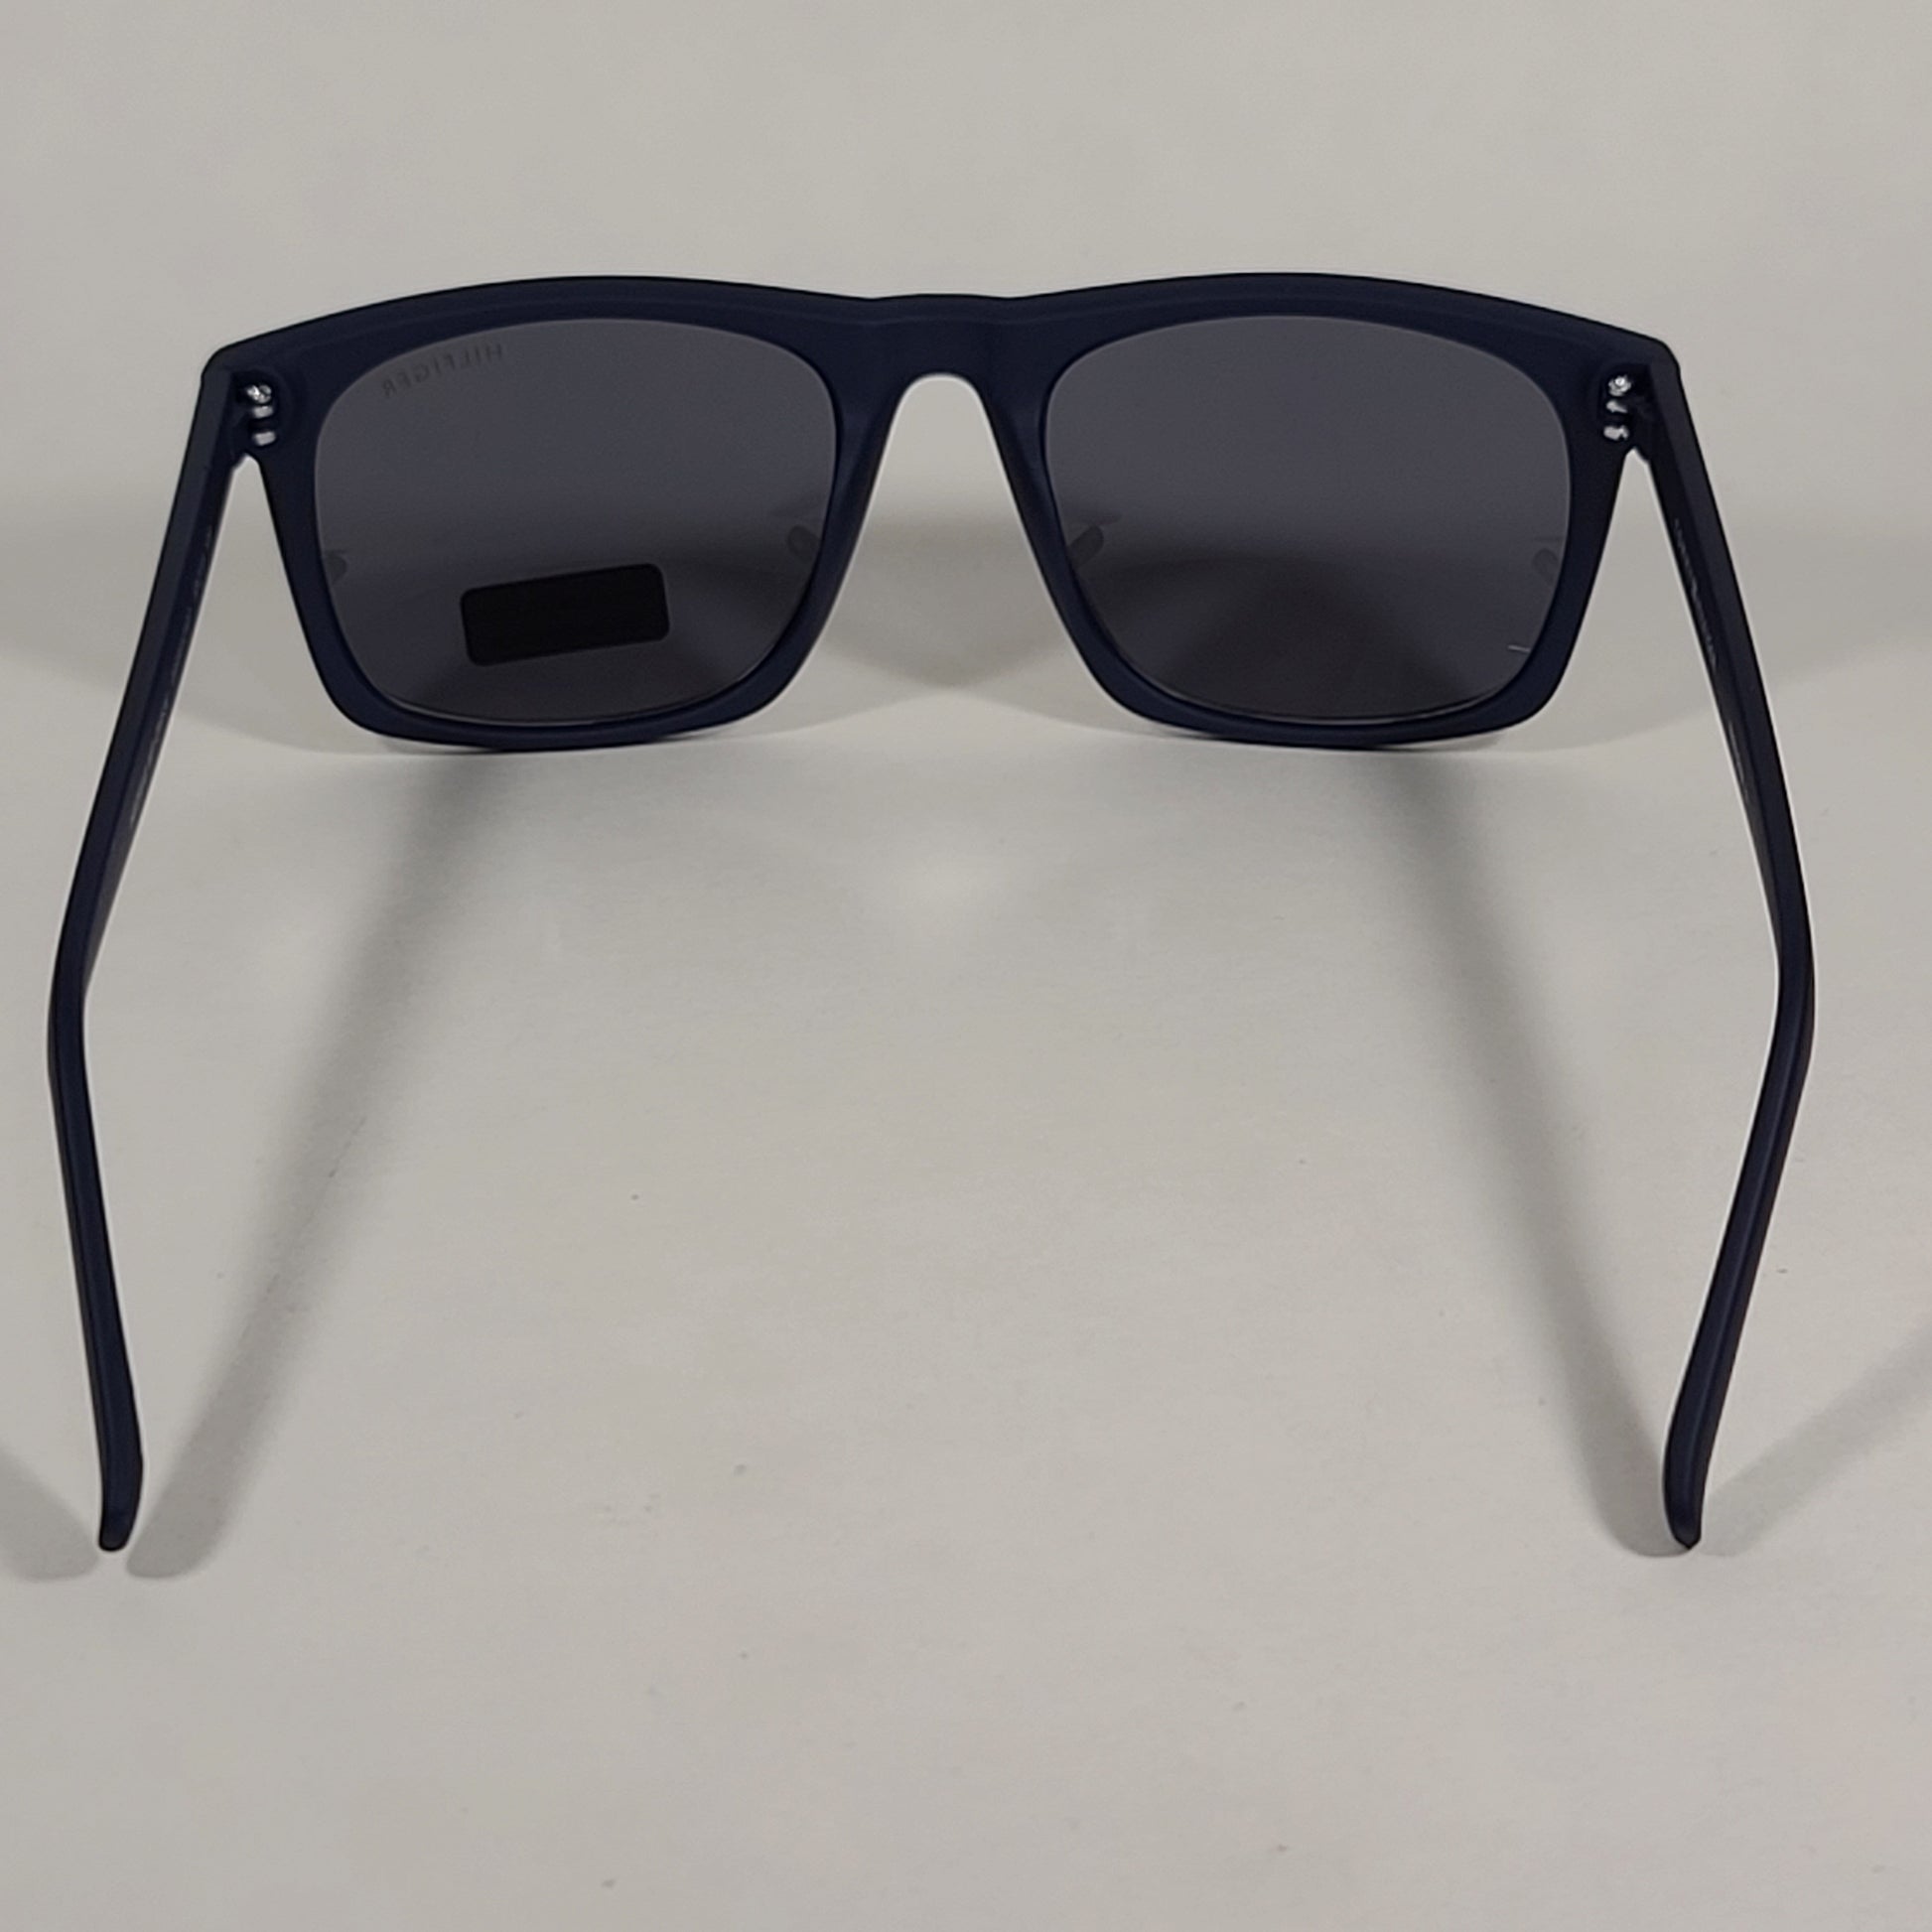 Tommy Hilfiger Hedwig Square Sunglasses Matte Dark Navy Blue Gray Lens HEDWIG MP OM536 - Sunglasses